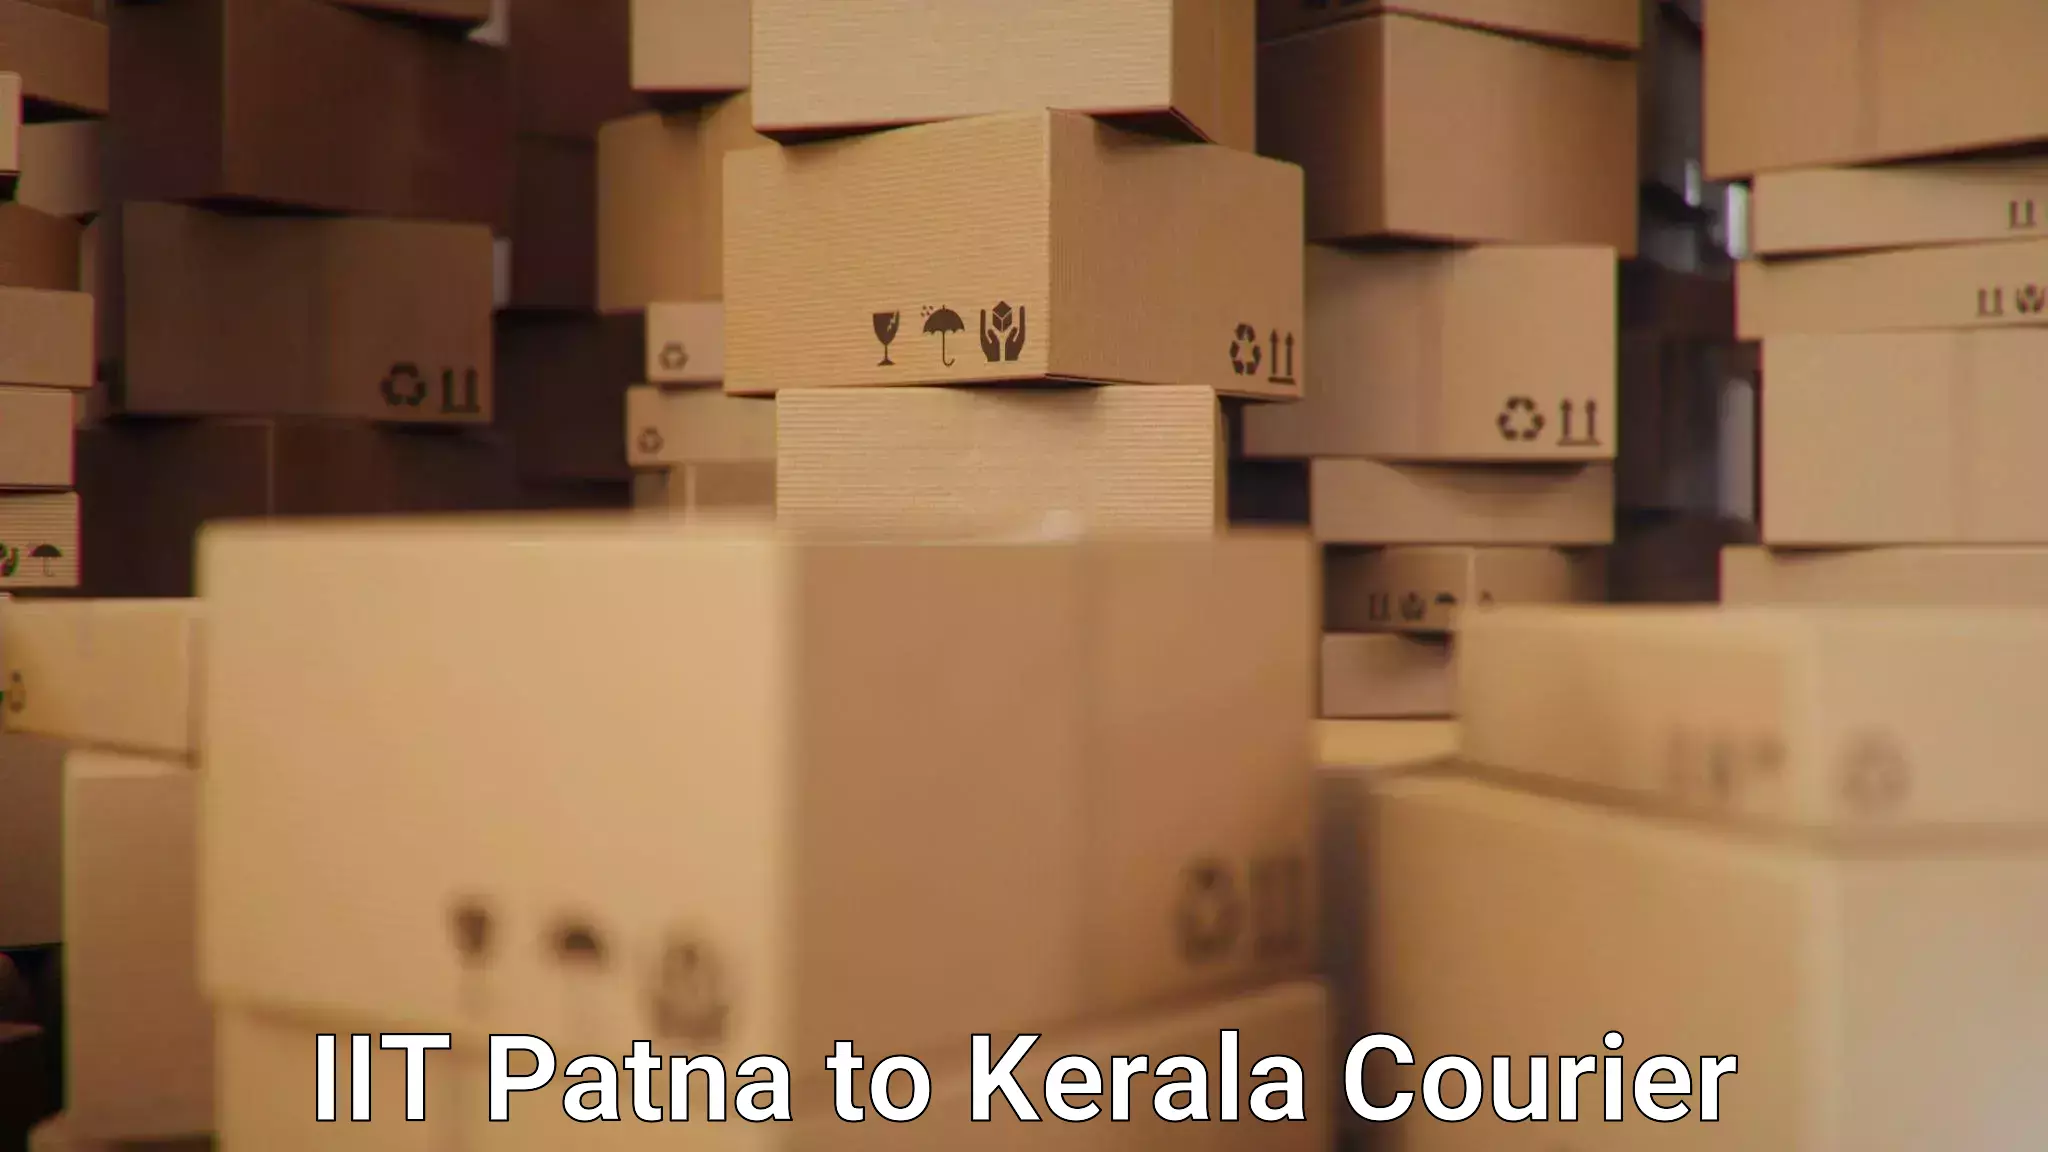 Courier service booking IIT Patna to Nedumkandam